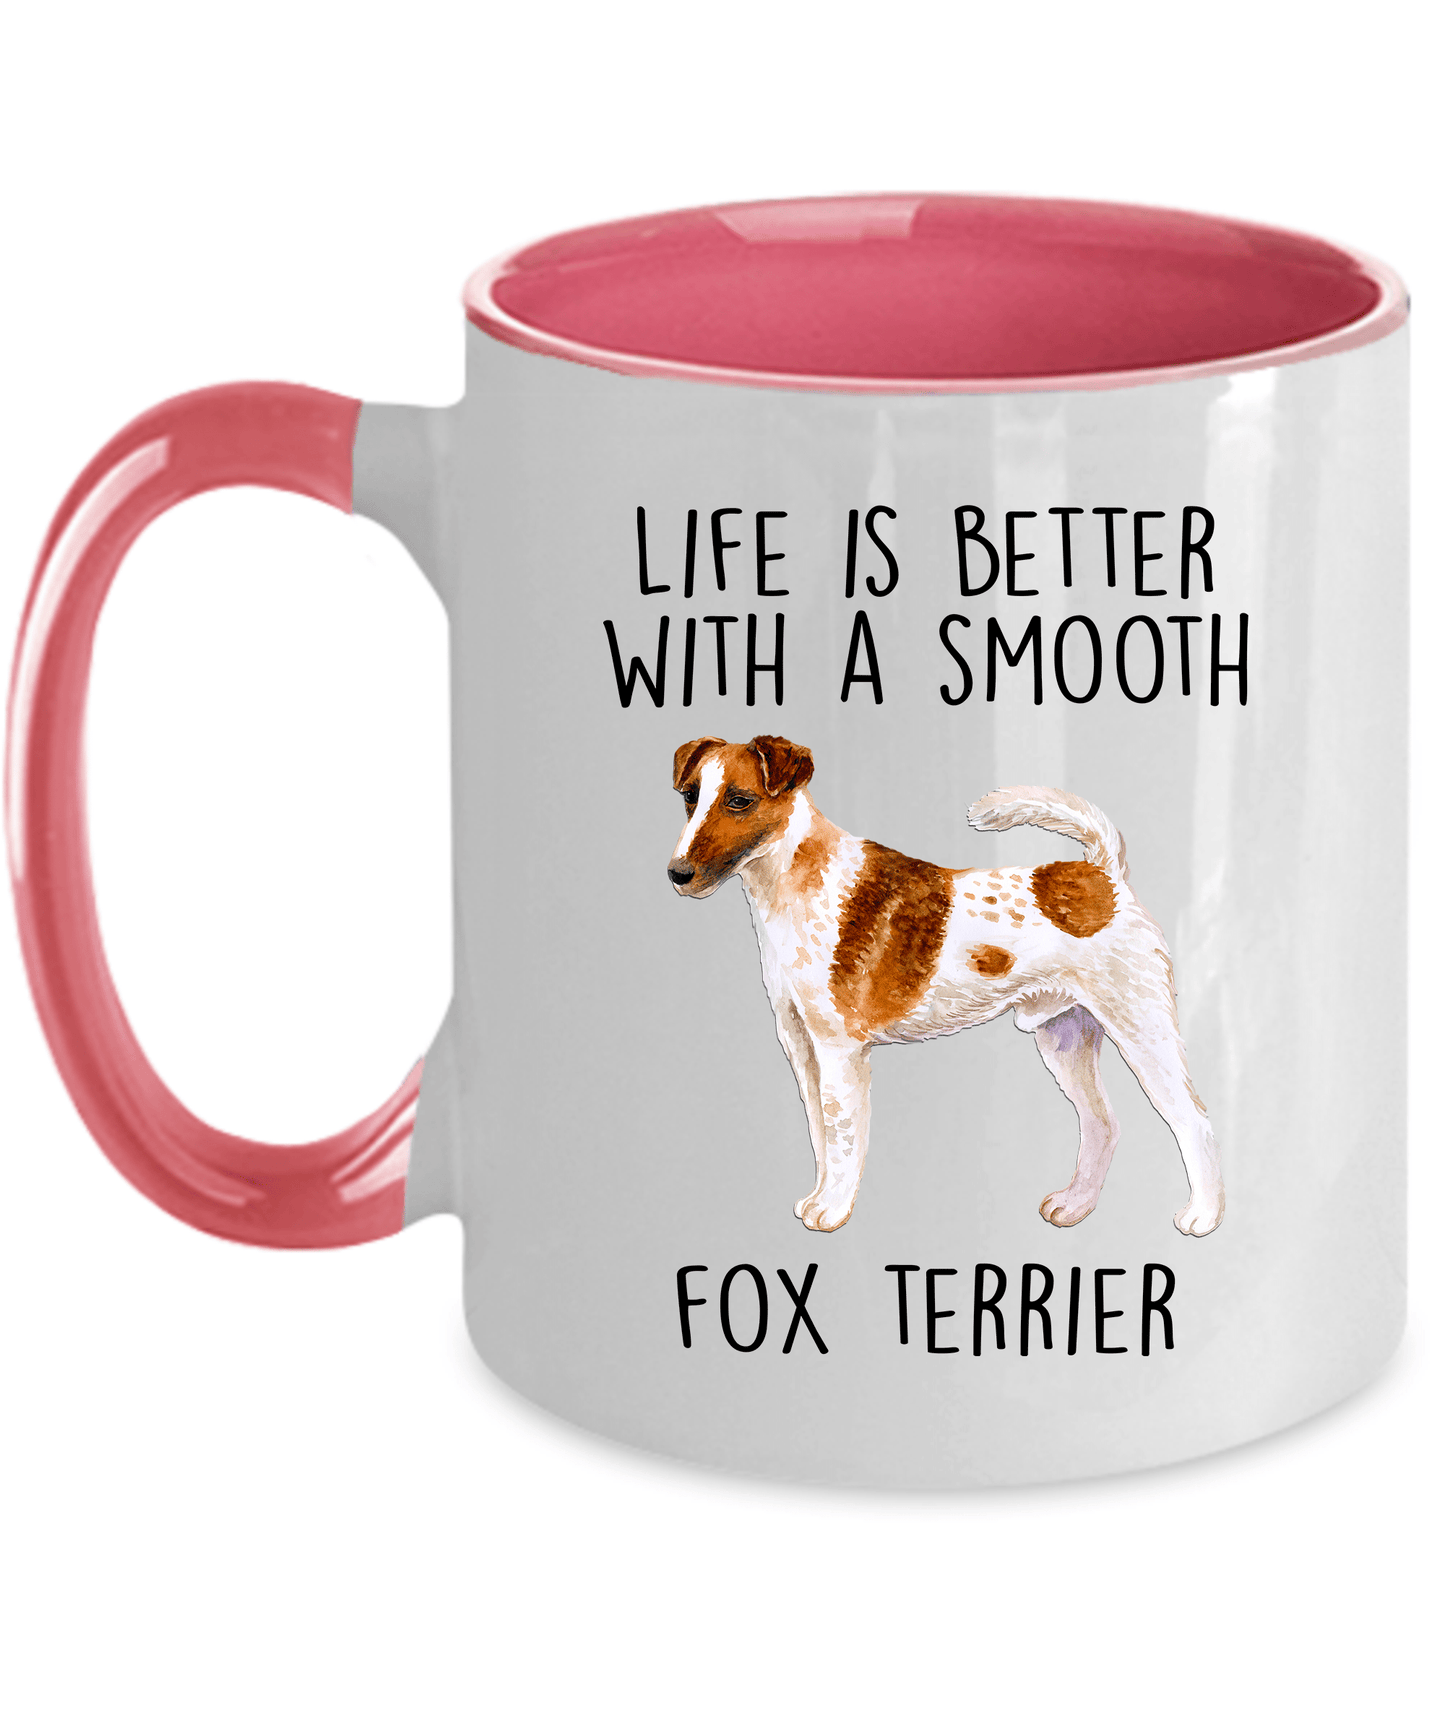 Best Ever Smooth Fox Terrier Dog Mom Ceramic Coffee Mug